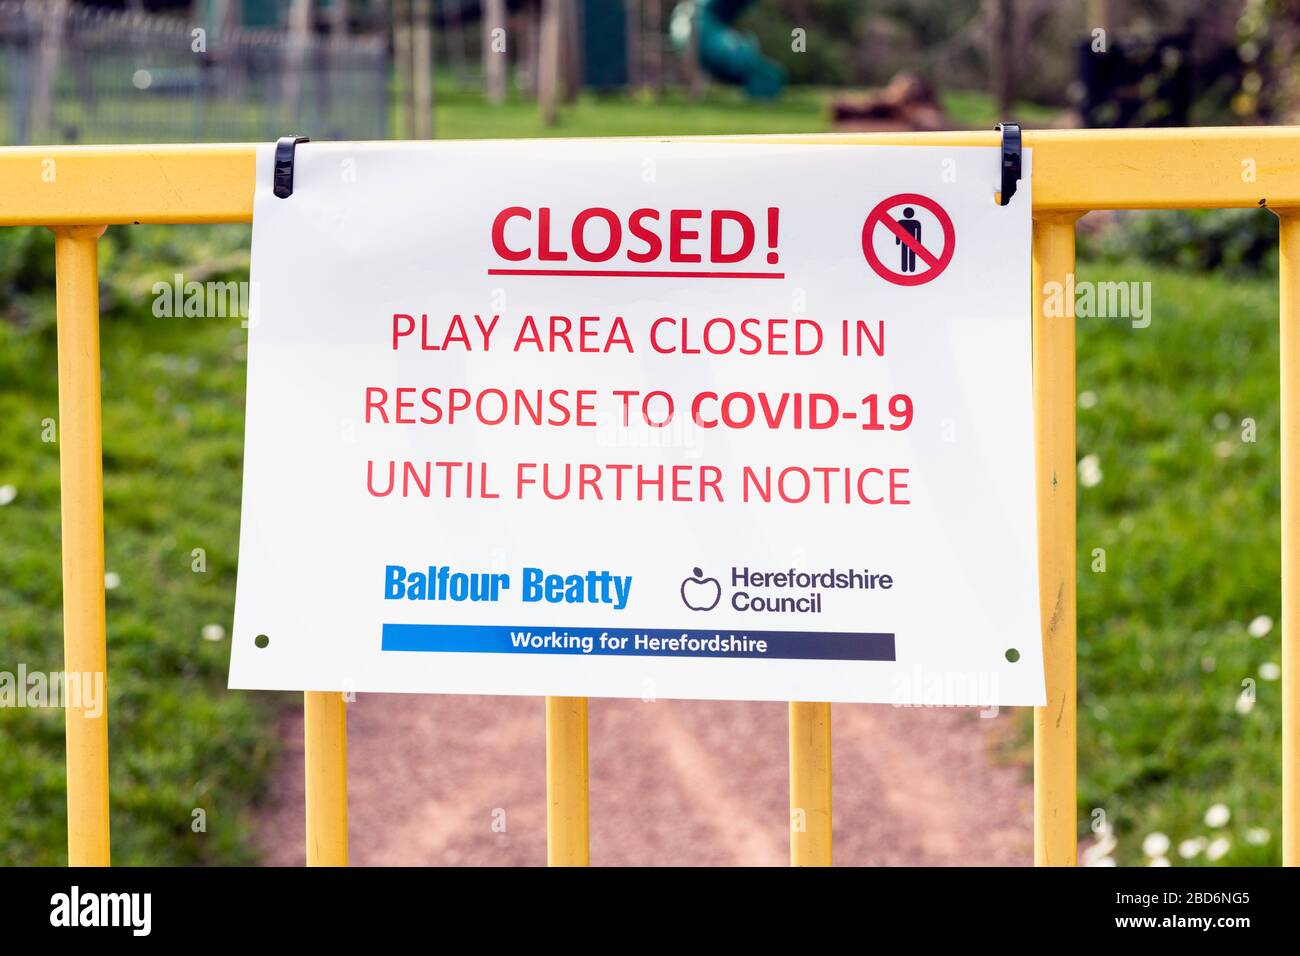 Playground closed in response to Coronavirus Covid-19, UK. Play area in lockdown, England. Stock Photo